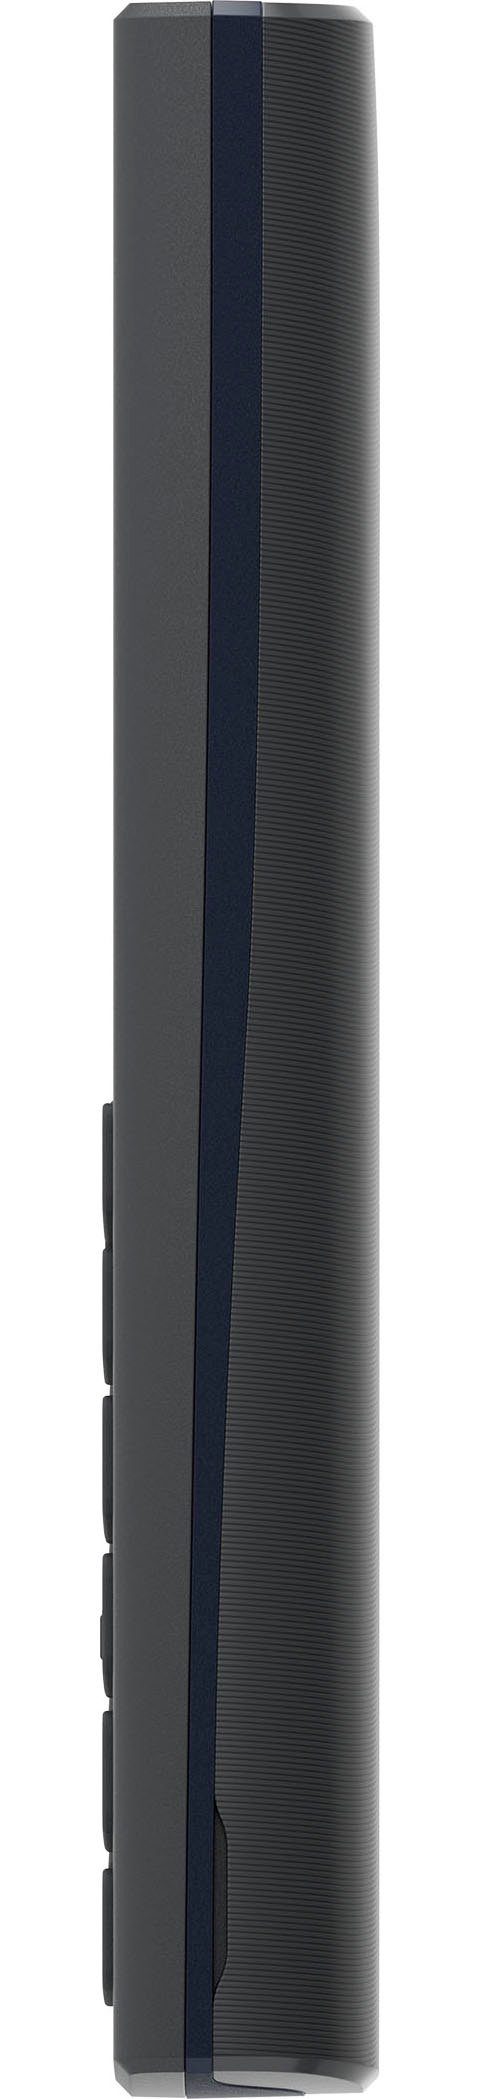 Nokia 105 2023 (4,5 Zoll) Smartphone Edition cm/1,77